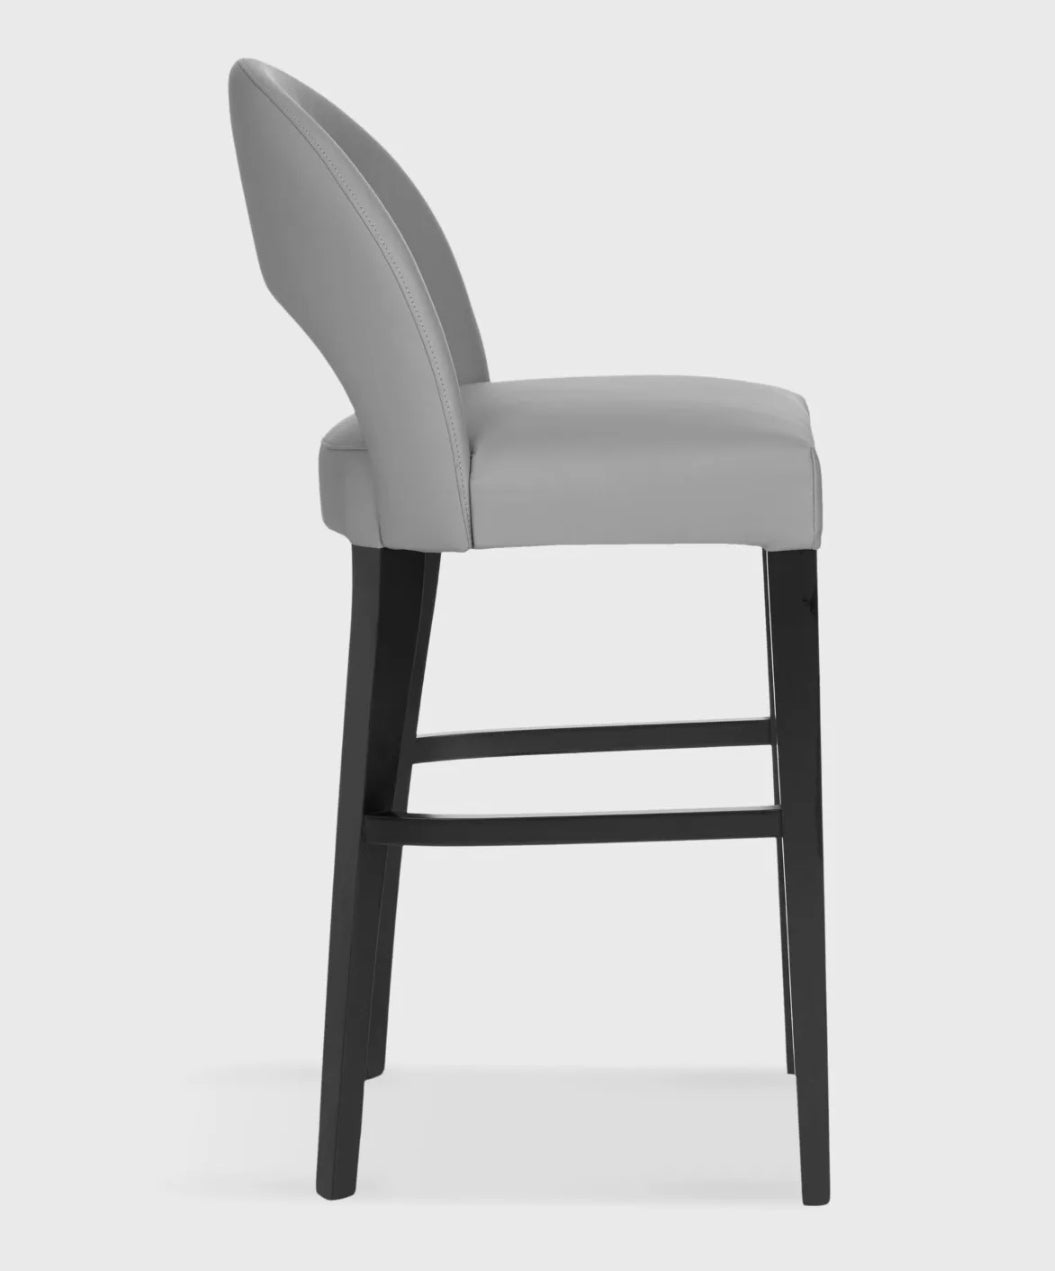 John Lewis & Partners Moritz Bar Chairs set, Light Grey RRP £650